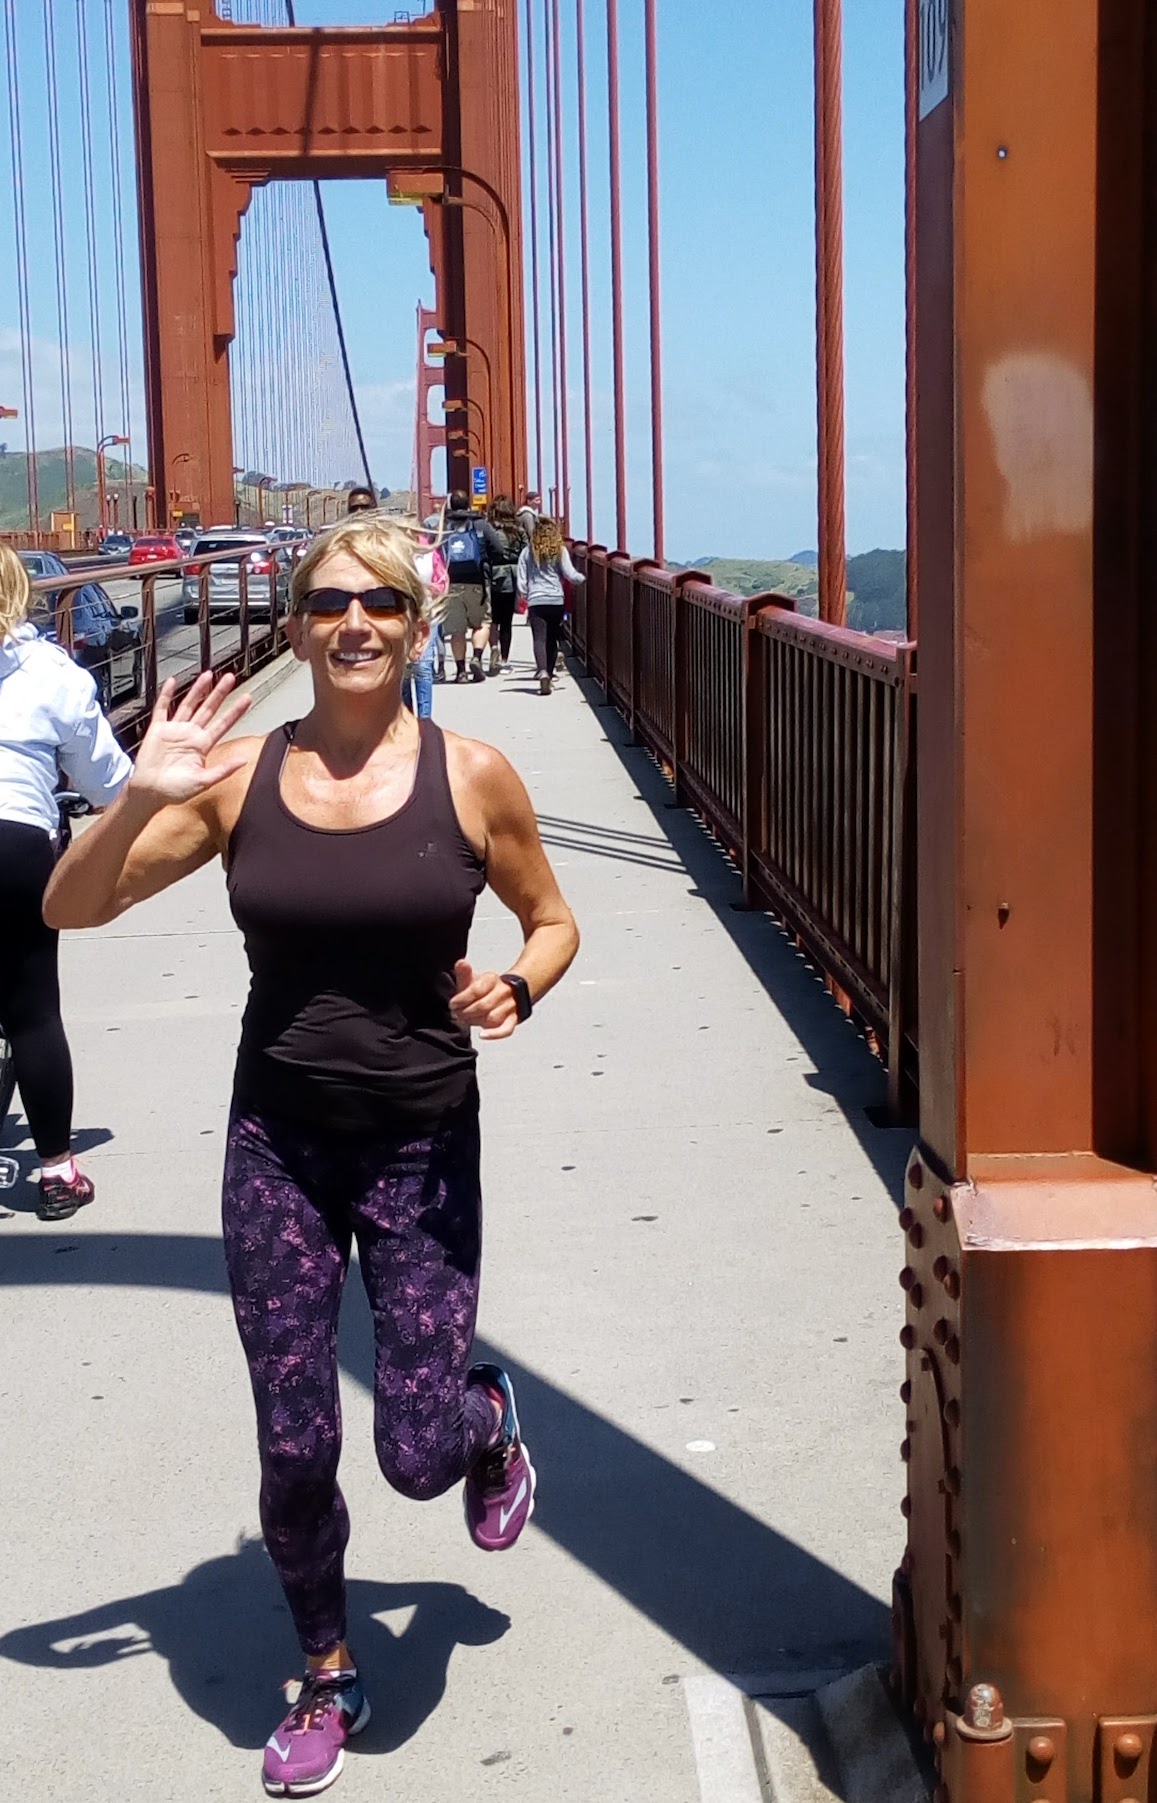 San Francisco Bay Area - running over the bridge